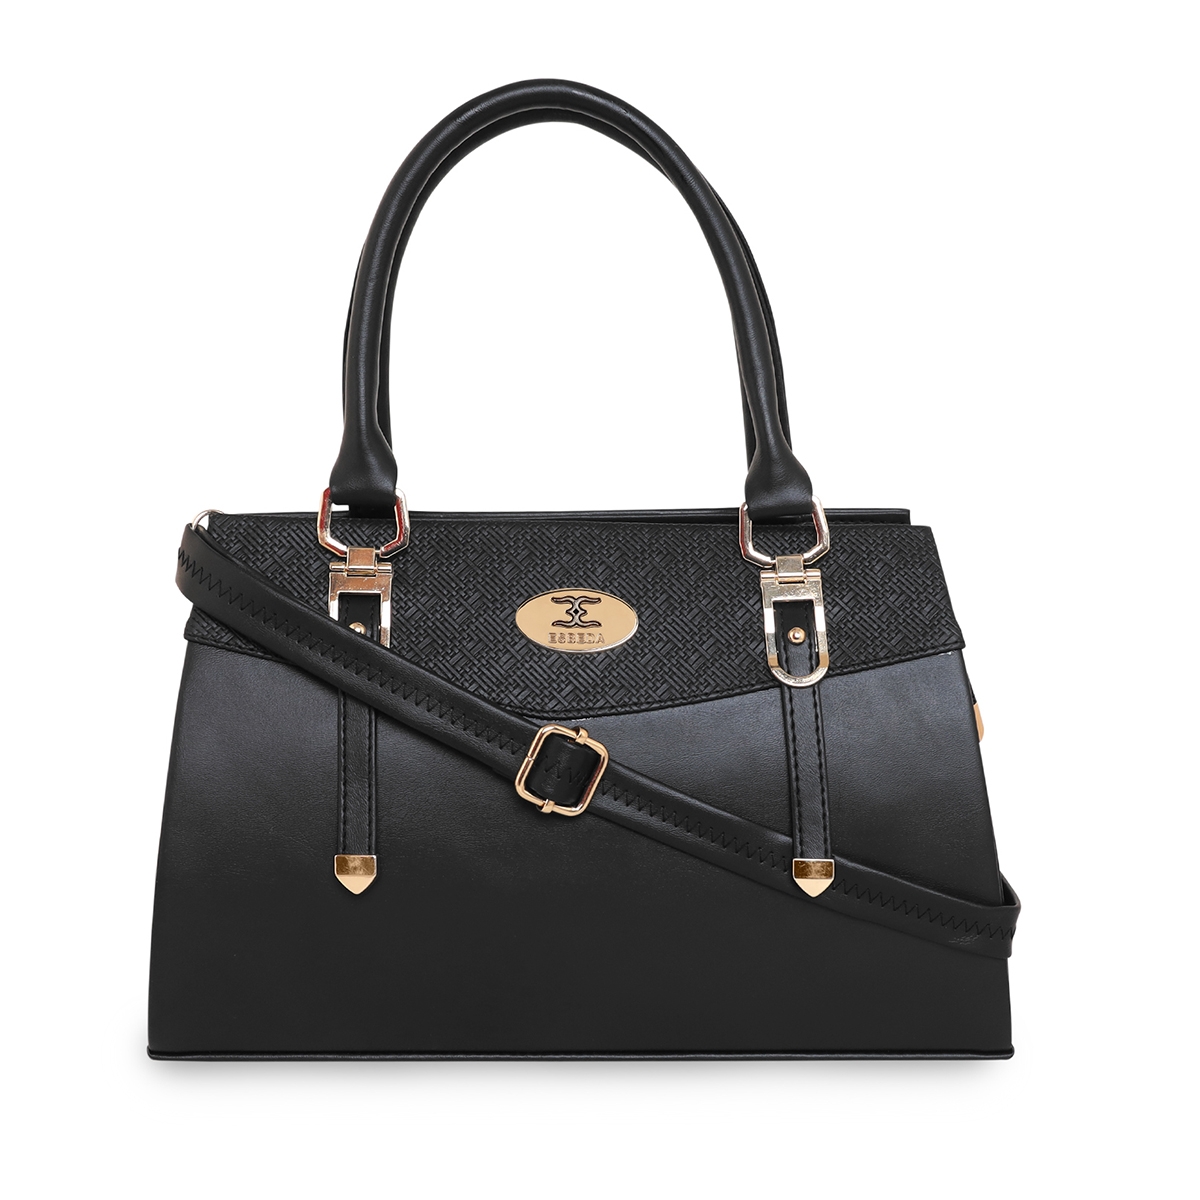 ESBEDA | ESBEDA Black Color Top handle Satchel bag For Women